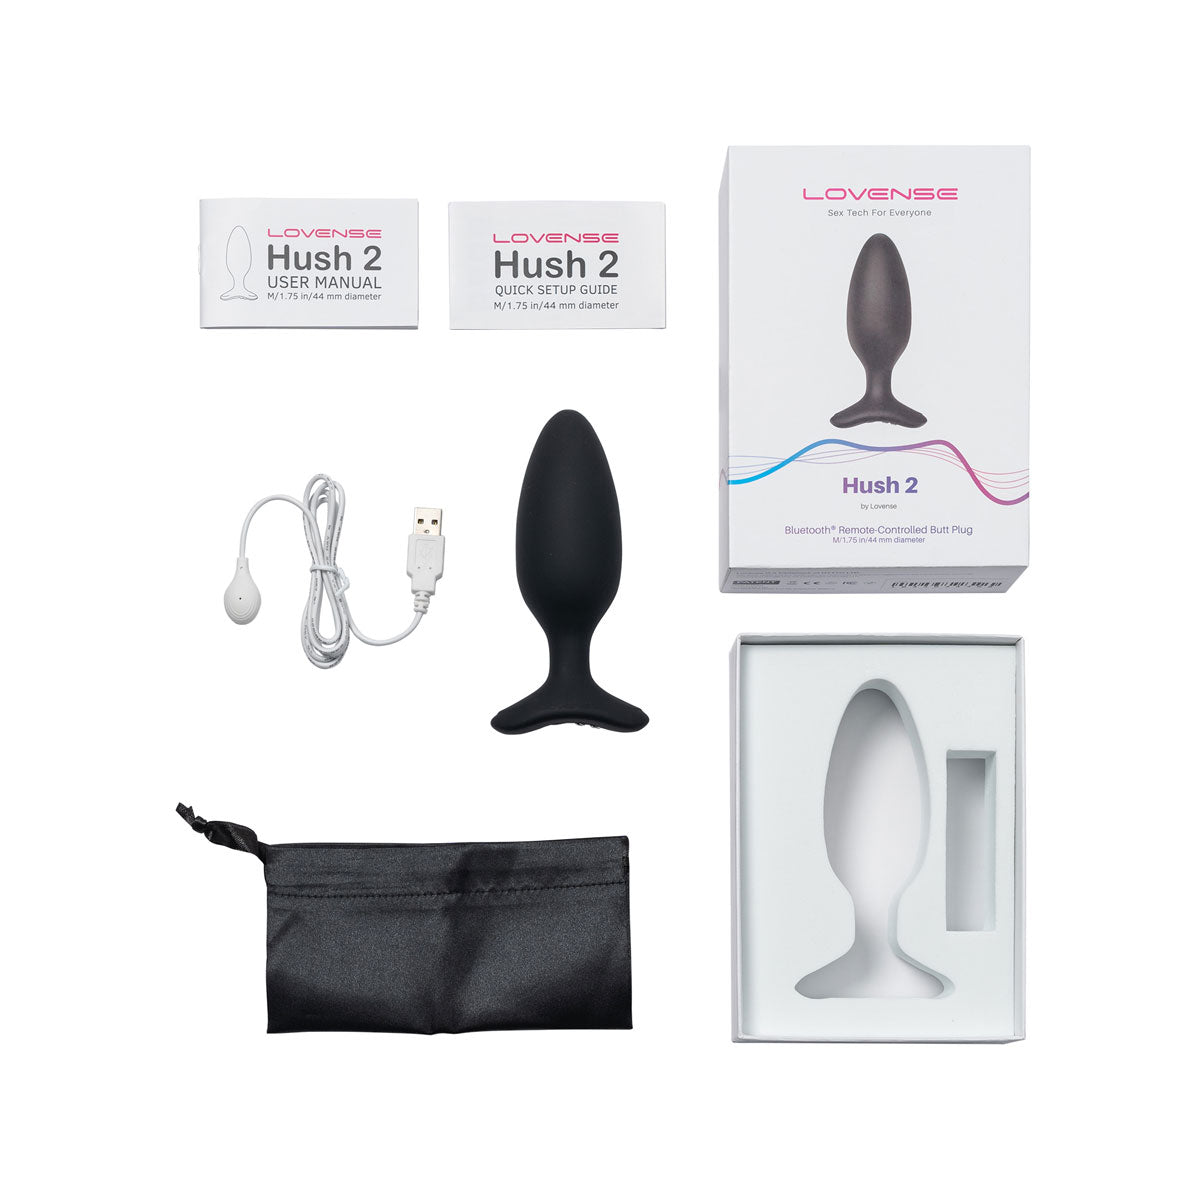 Lovense Hush 2 – 1.75 In. Bluetooth Vibrating Butt Plug – Black